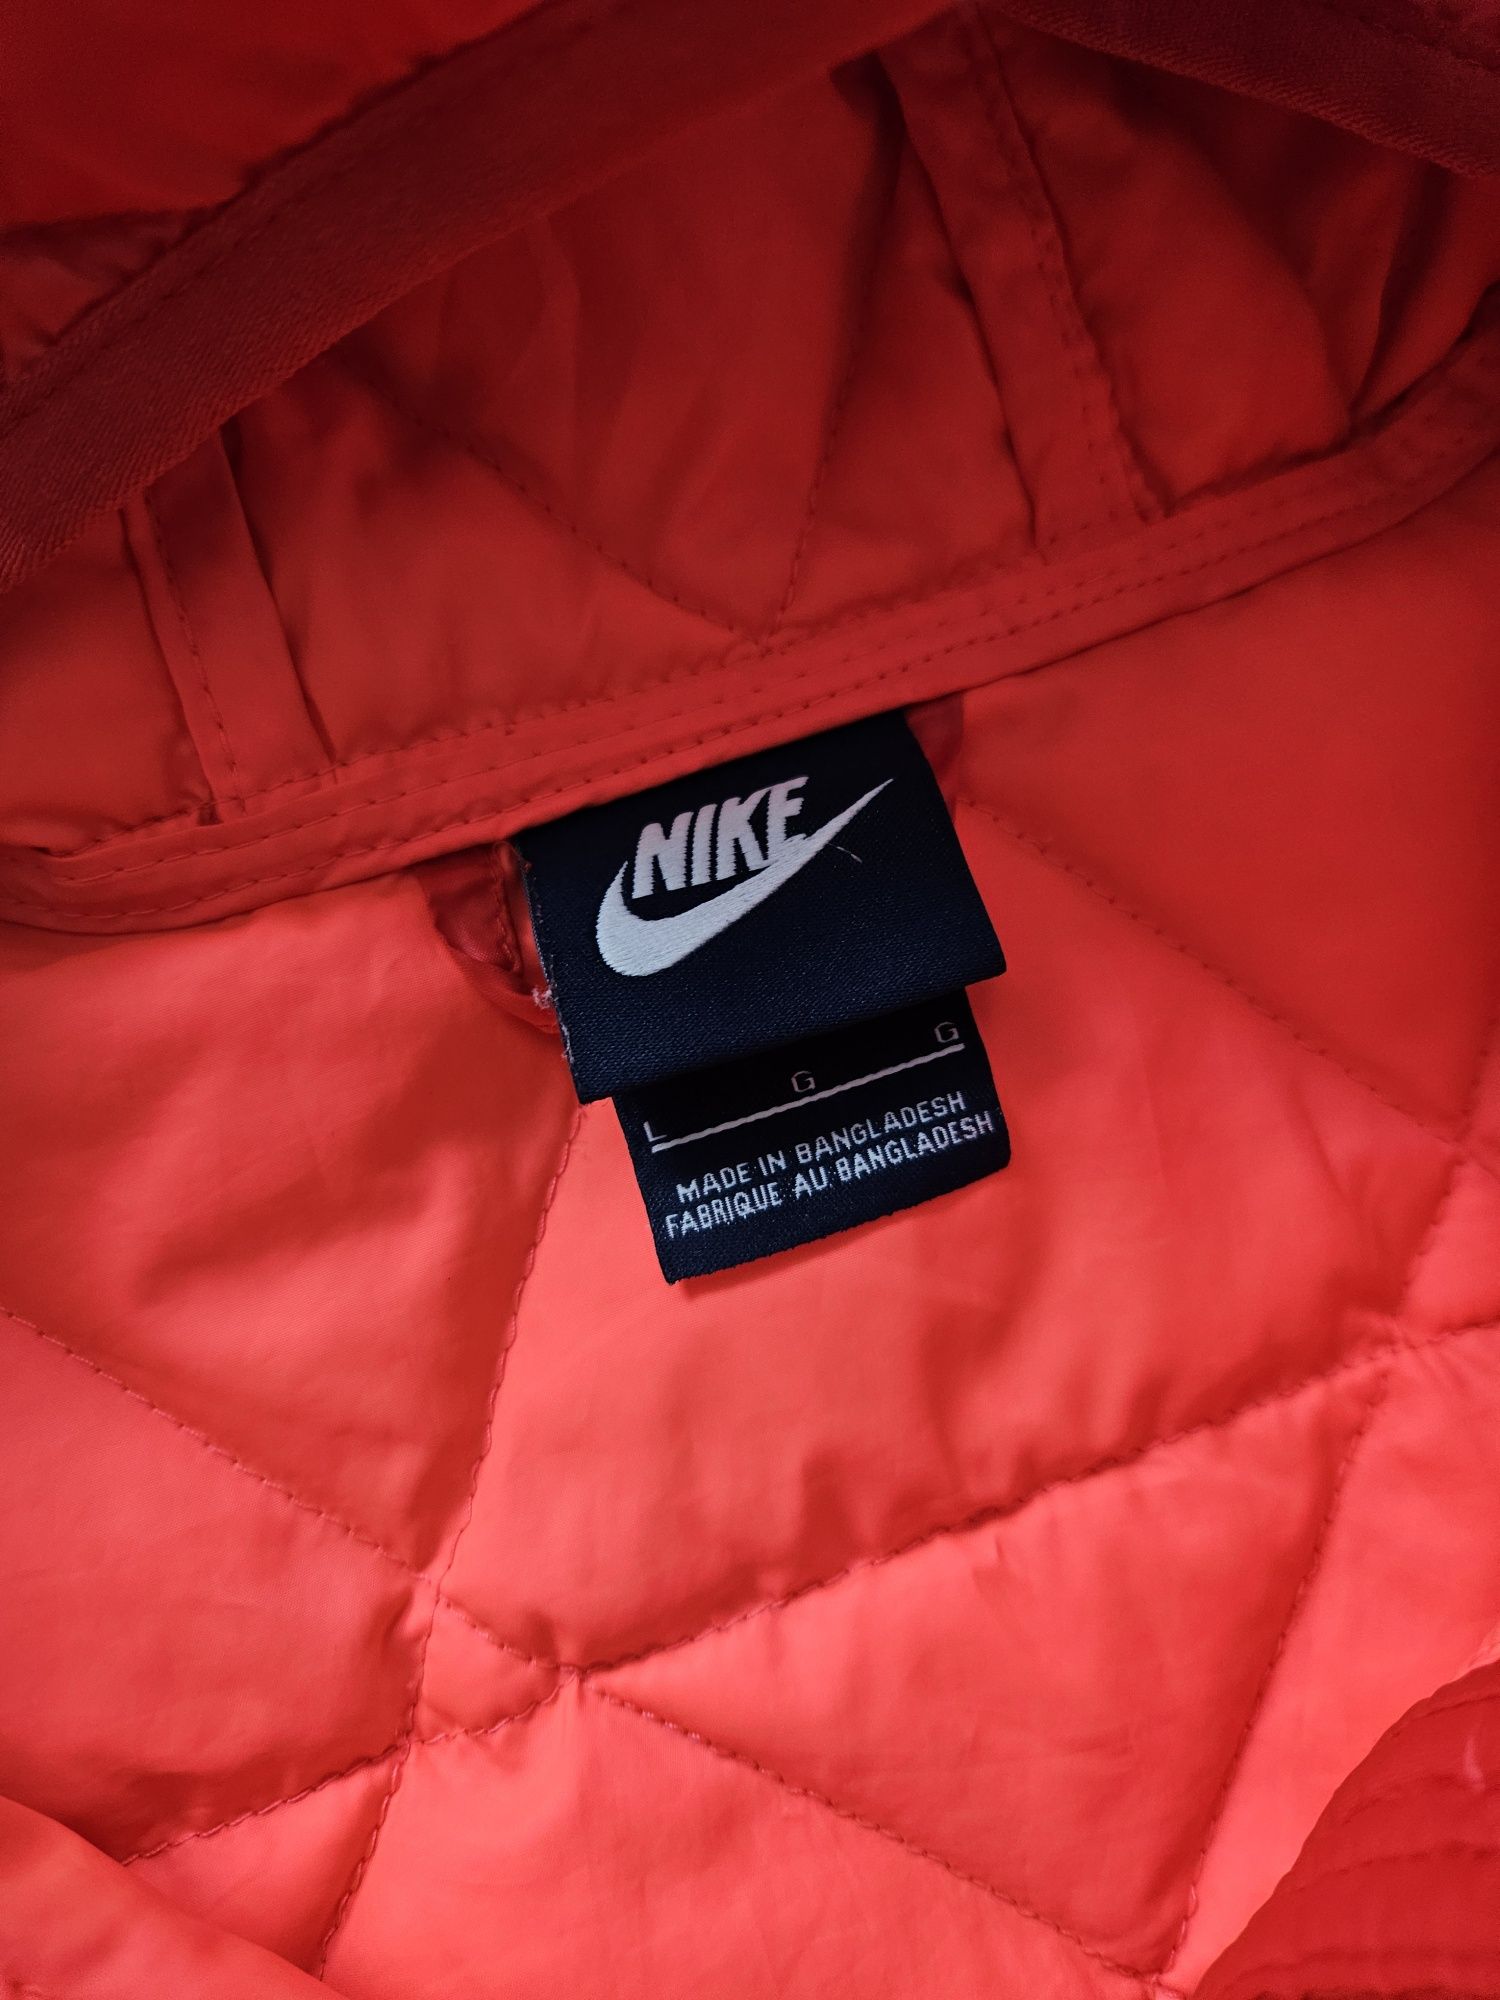 Nike kurtka pikowana puchowa bomberka